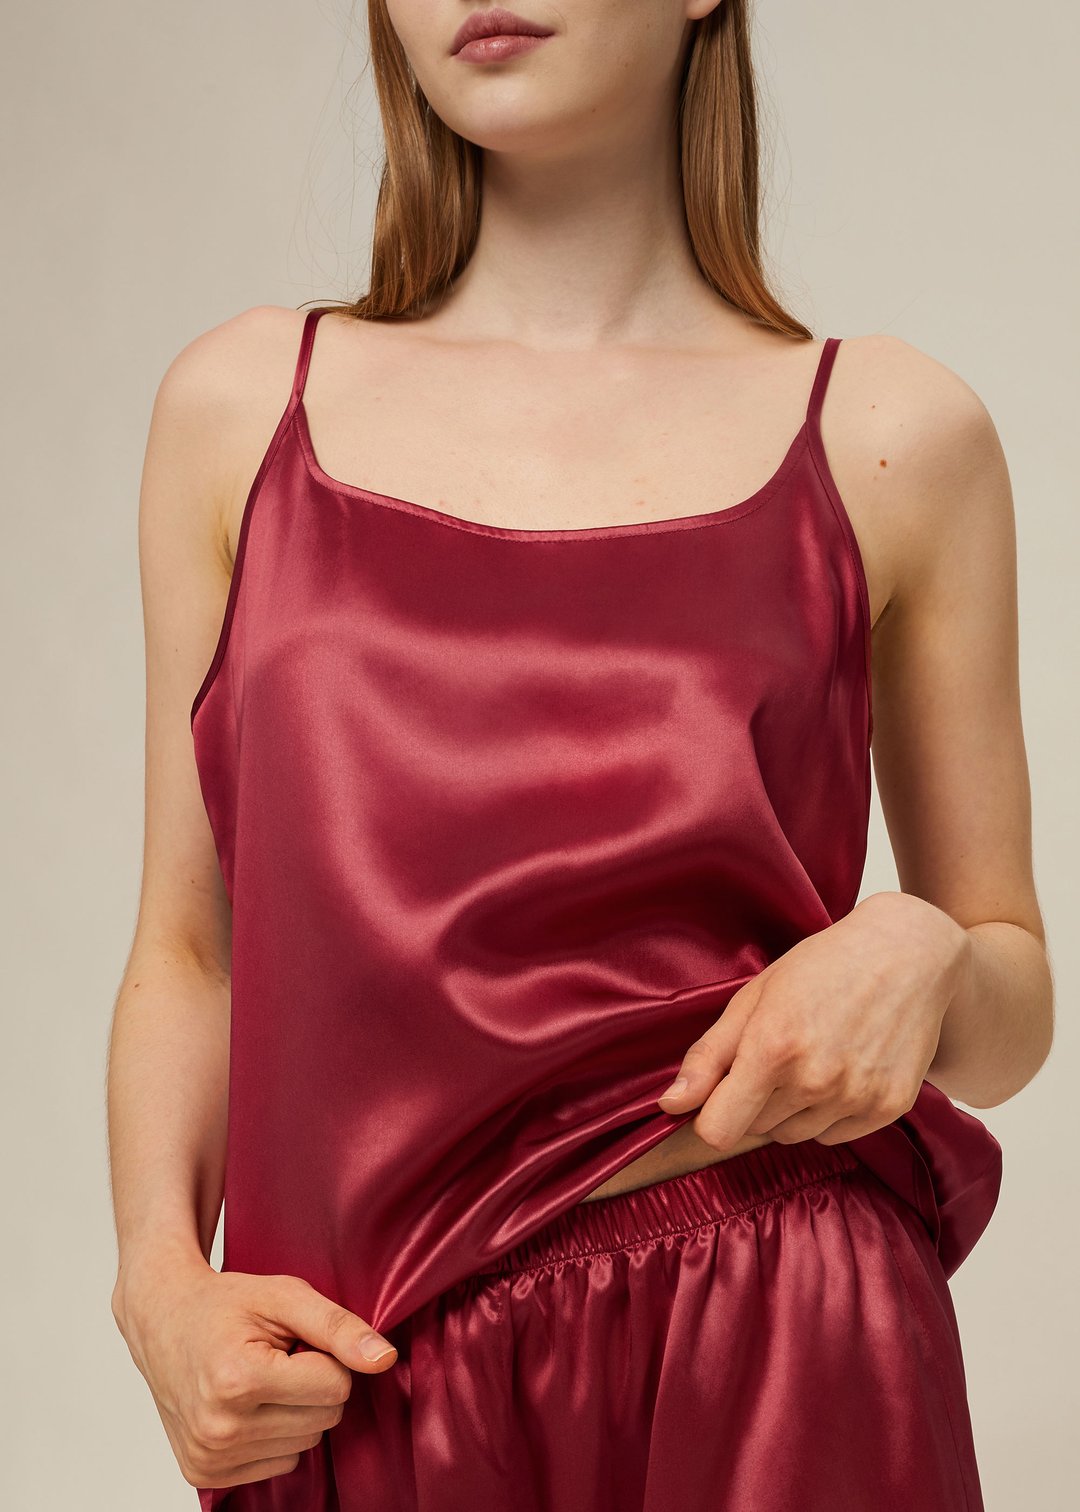 Sajiero Spice Ceder Strap Jumpsuit maroon color silk jumpsuit for women summers jumpsuit